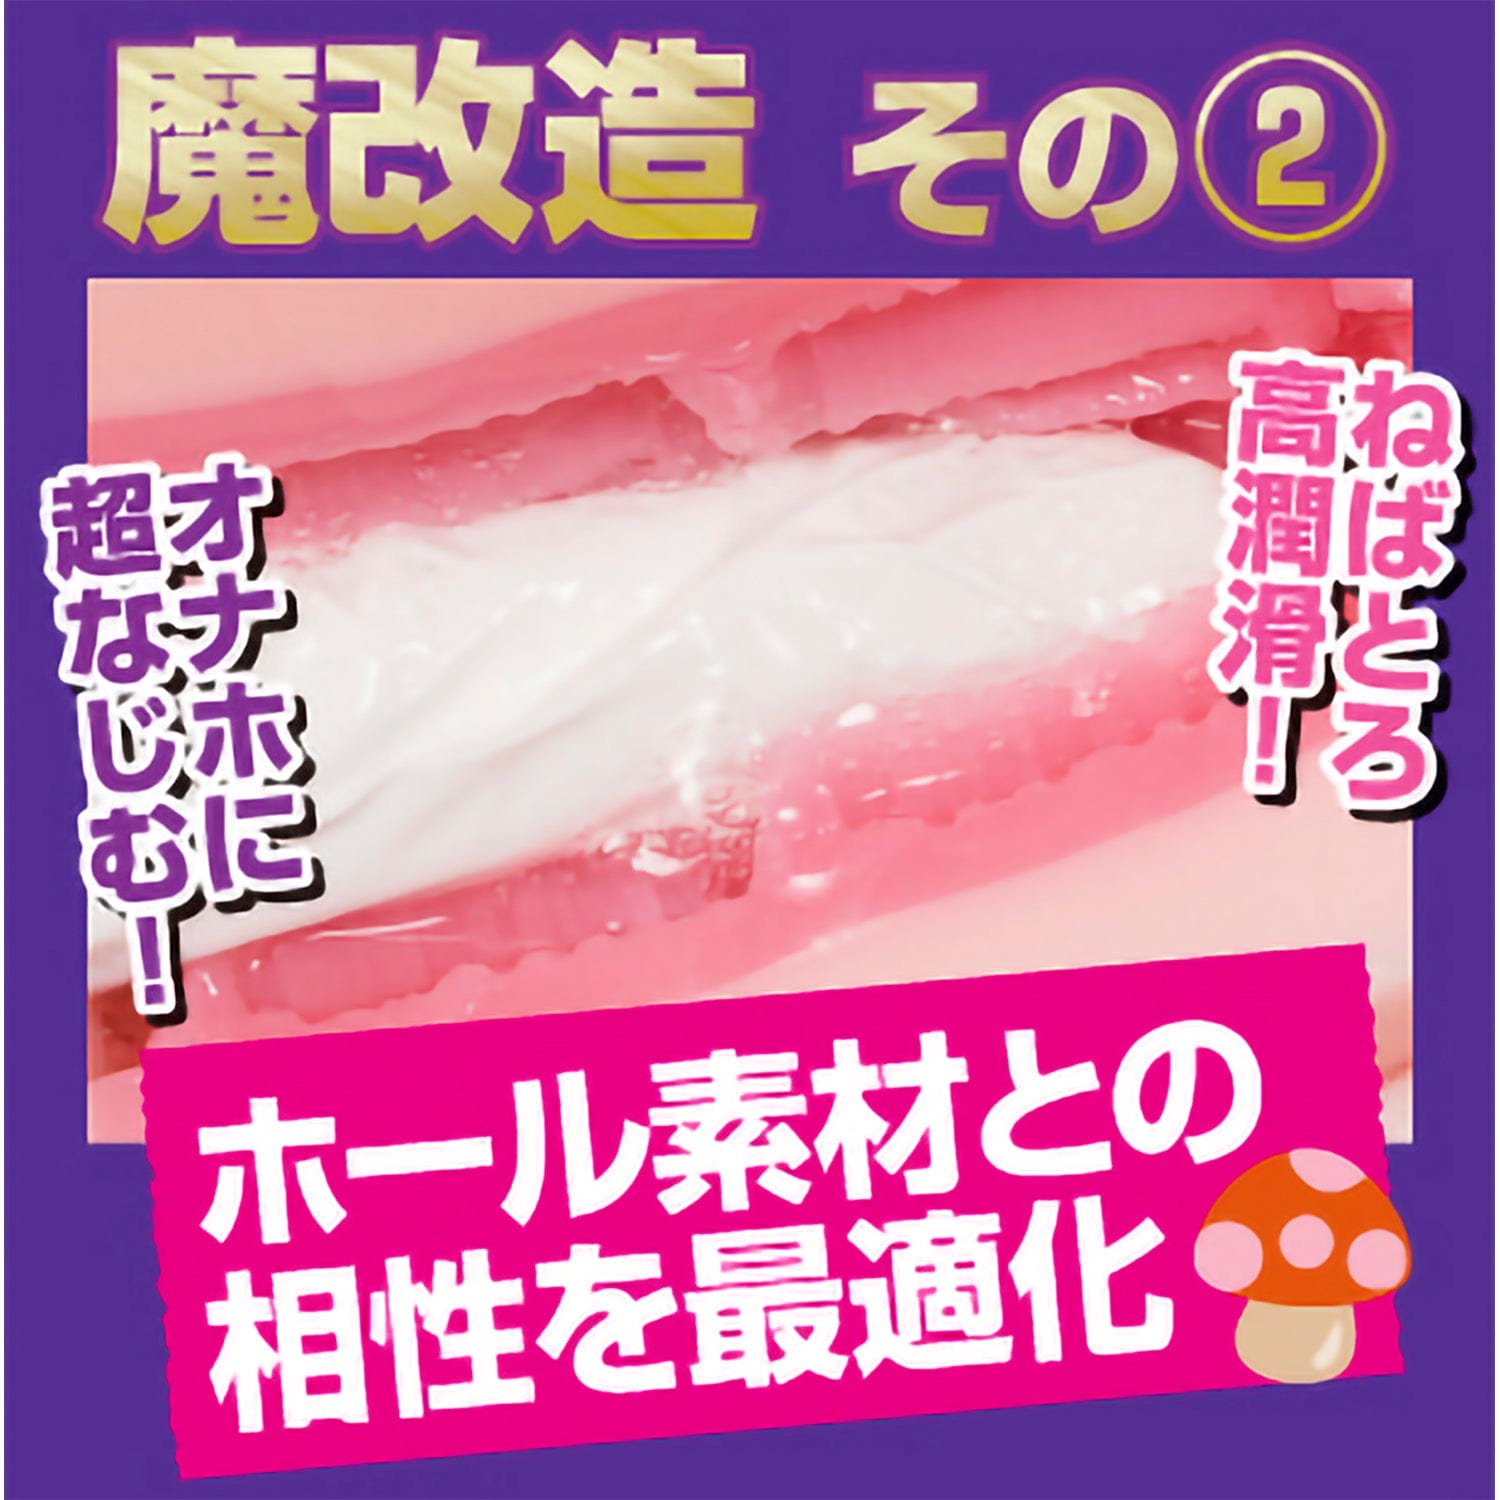 NPG - Soft Boiled Succubus Magic Modified Lotion Yumenoshiori New Nakano Lubricant 300ml -  Lube (Water Based)  Durio.sg